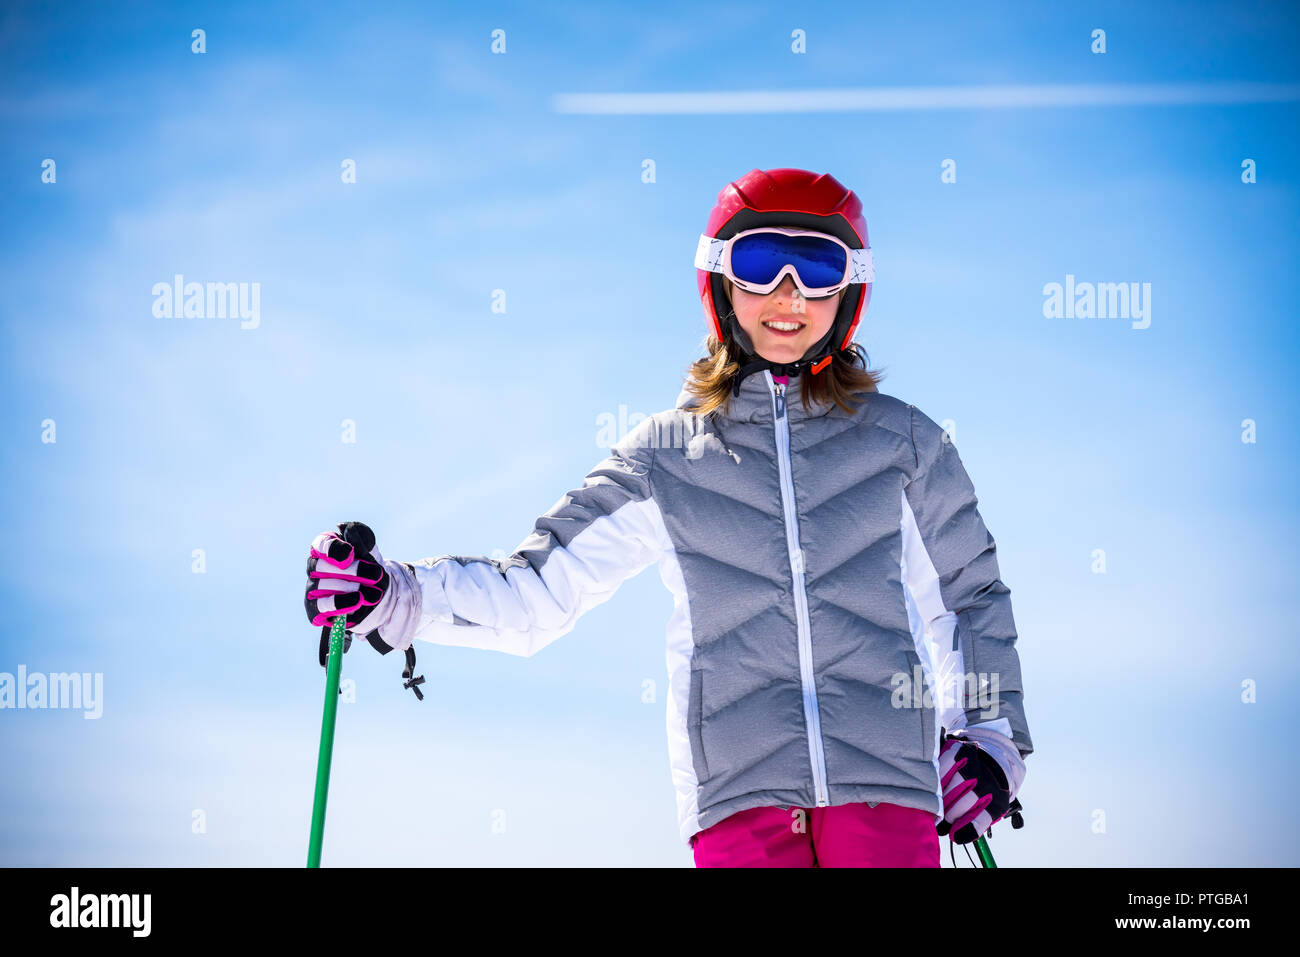 Little girl learning to ski Stock Photo